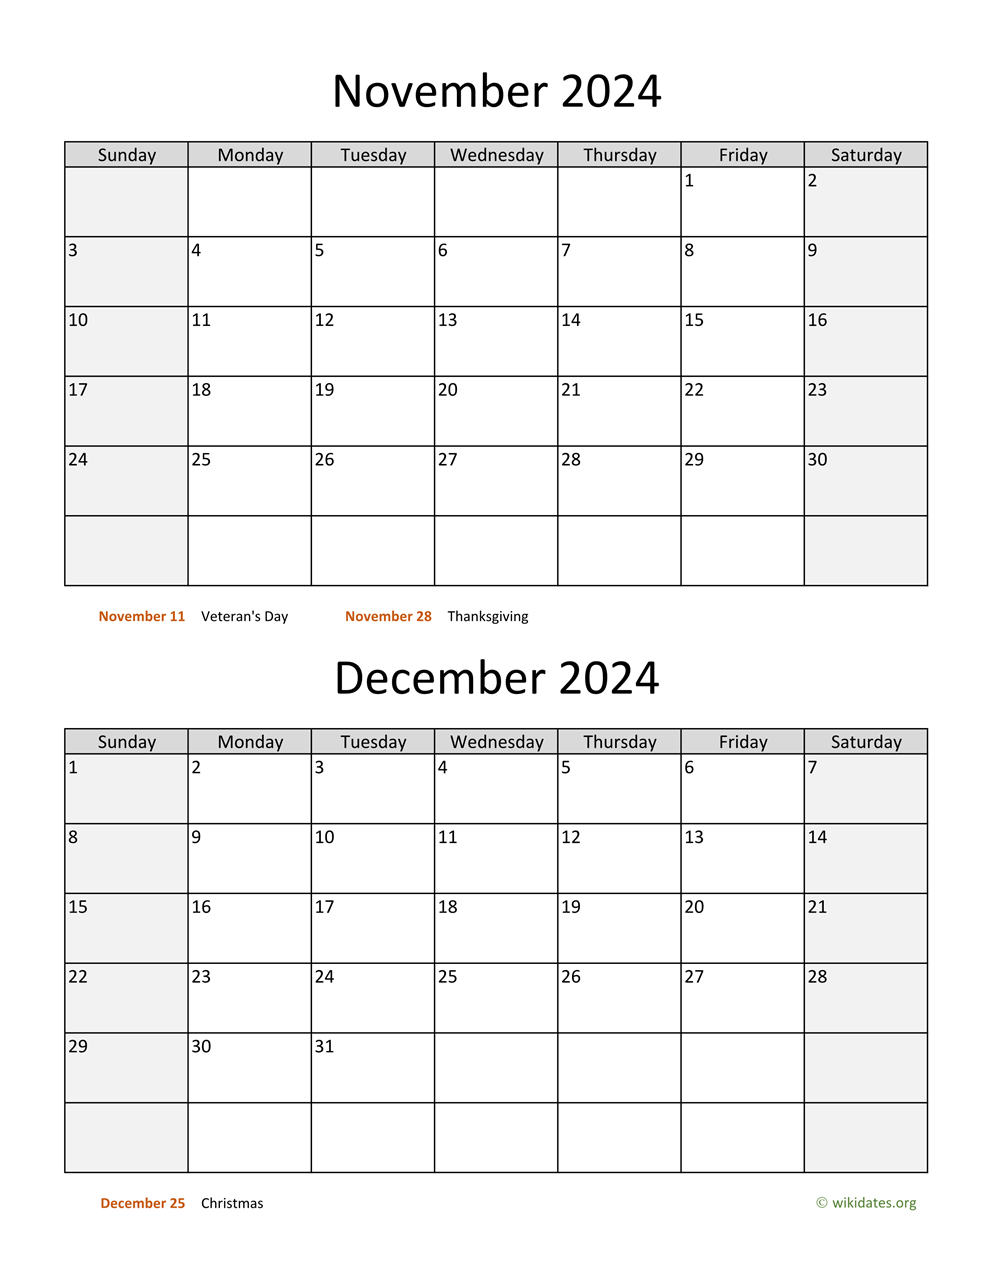 November and December 2024 Calendar | WikiDates.org